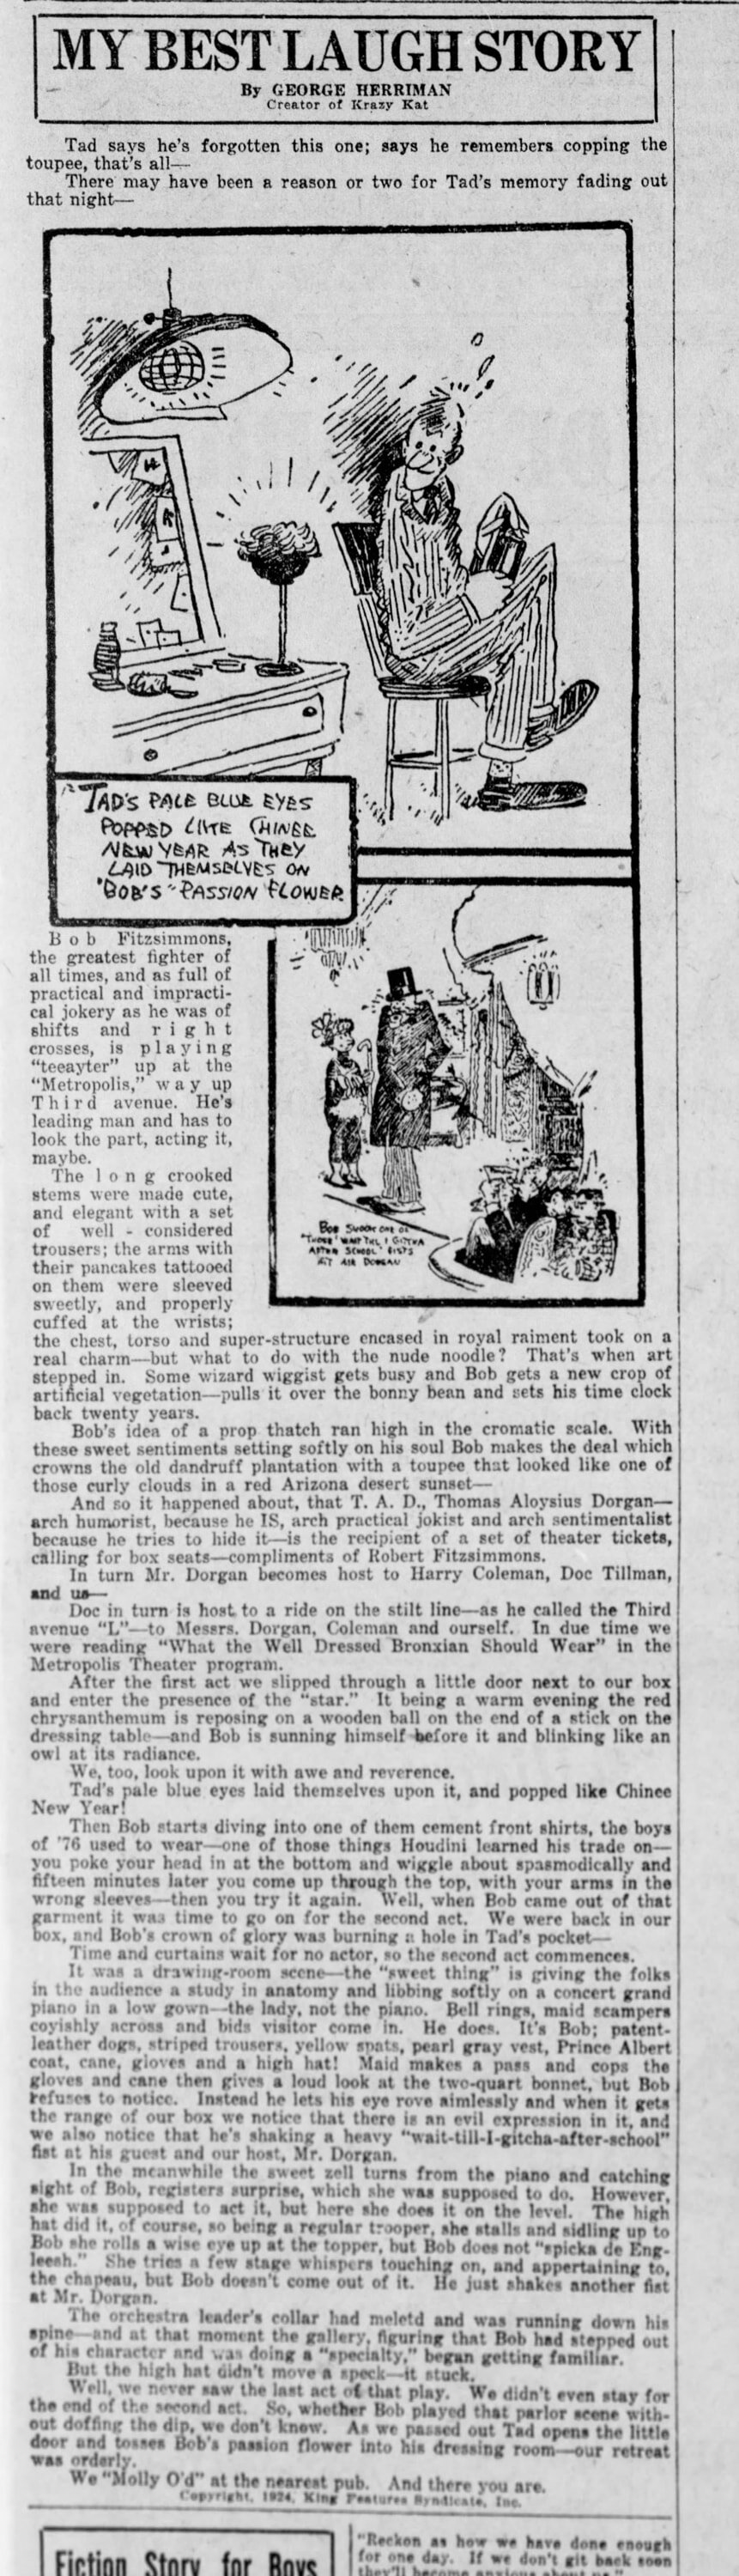 07-1924-10-18-harrisburg-evening-news-herriman-tells-story-of-tad-dorgan.jpg